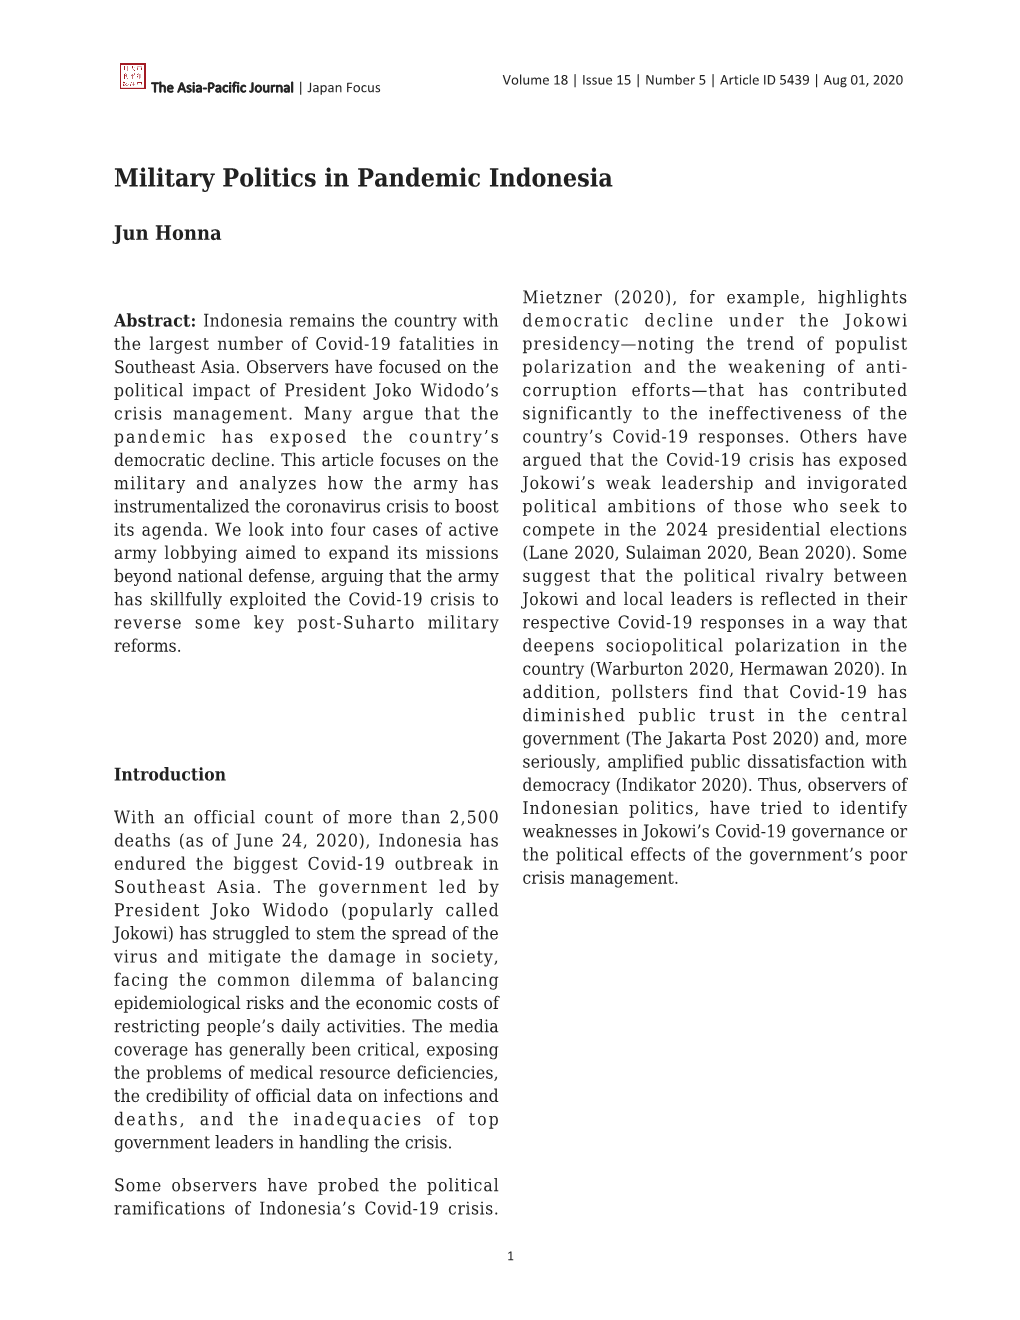 Military Politics in Pandemic Indonesia